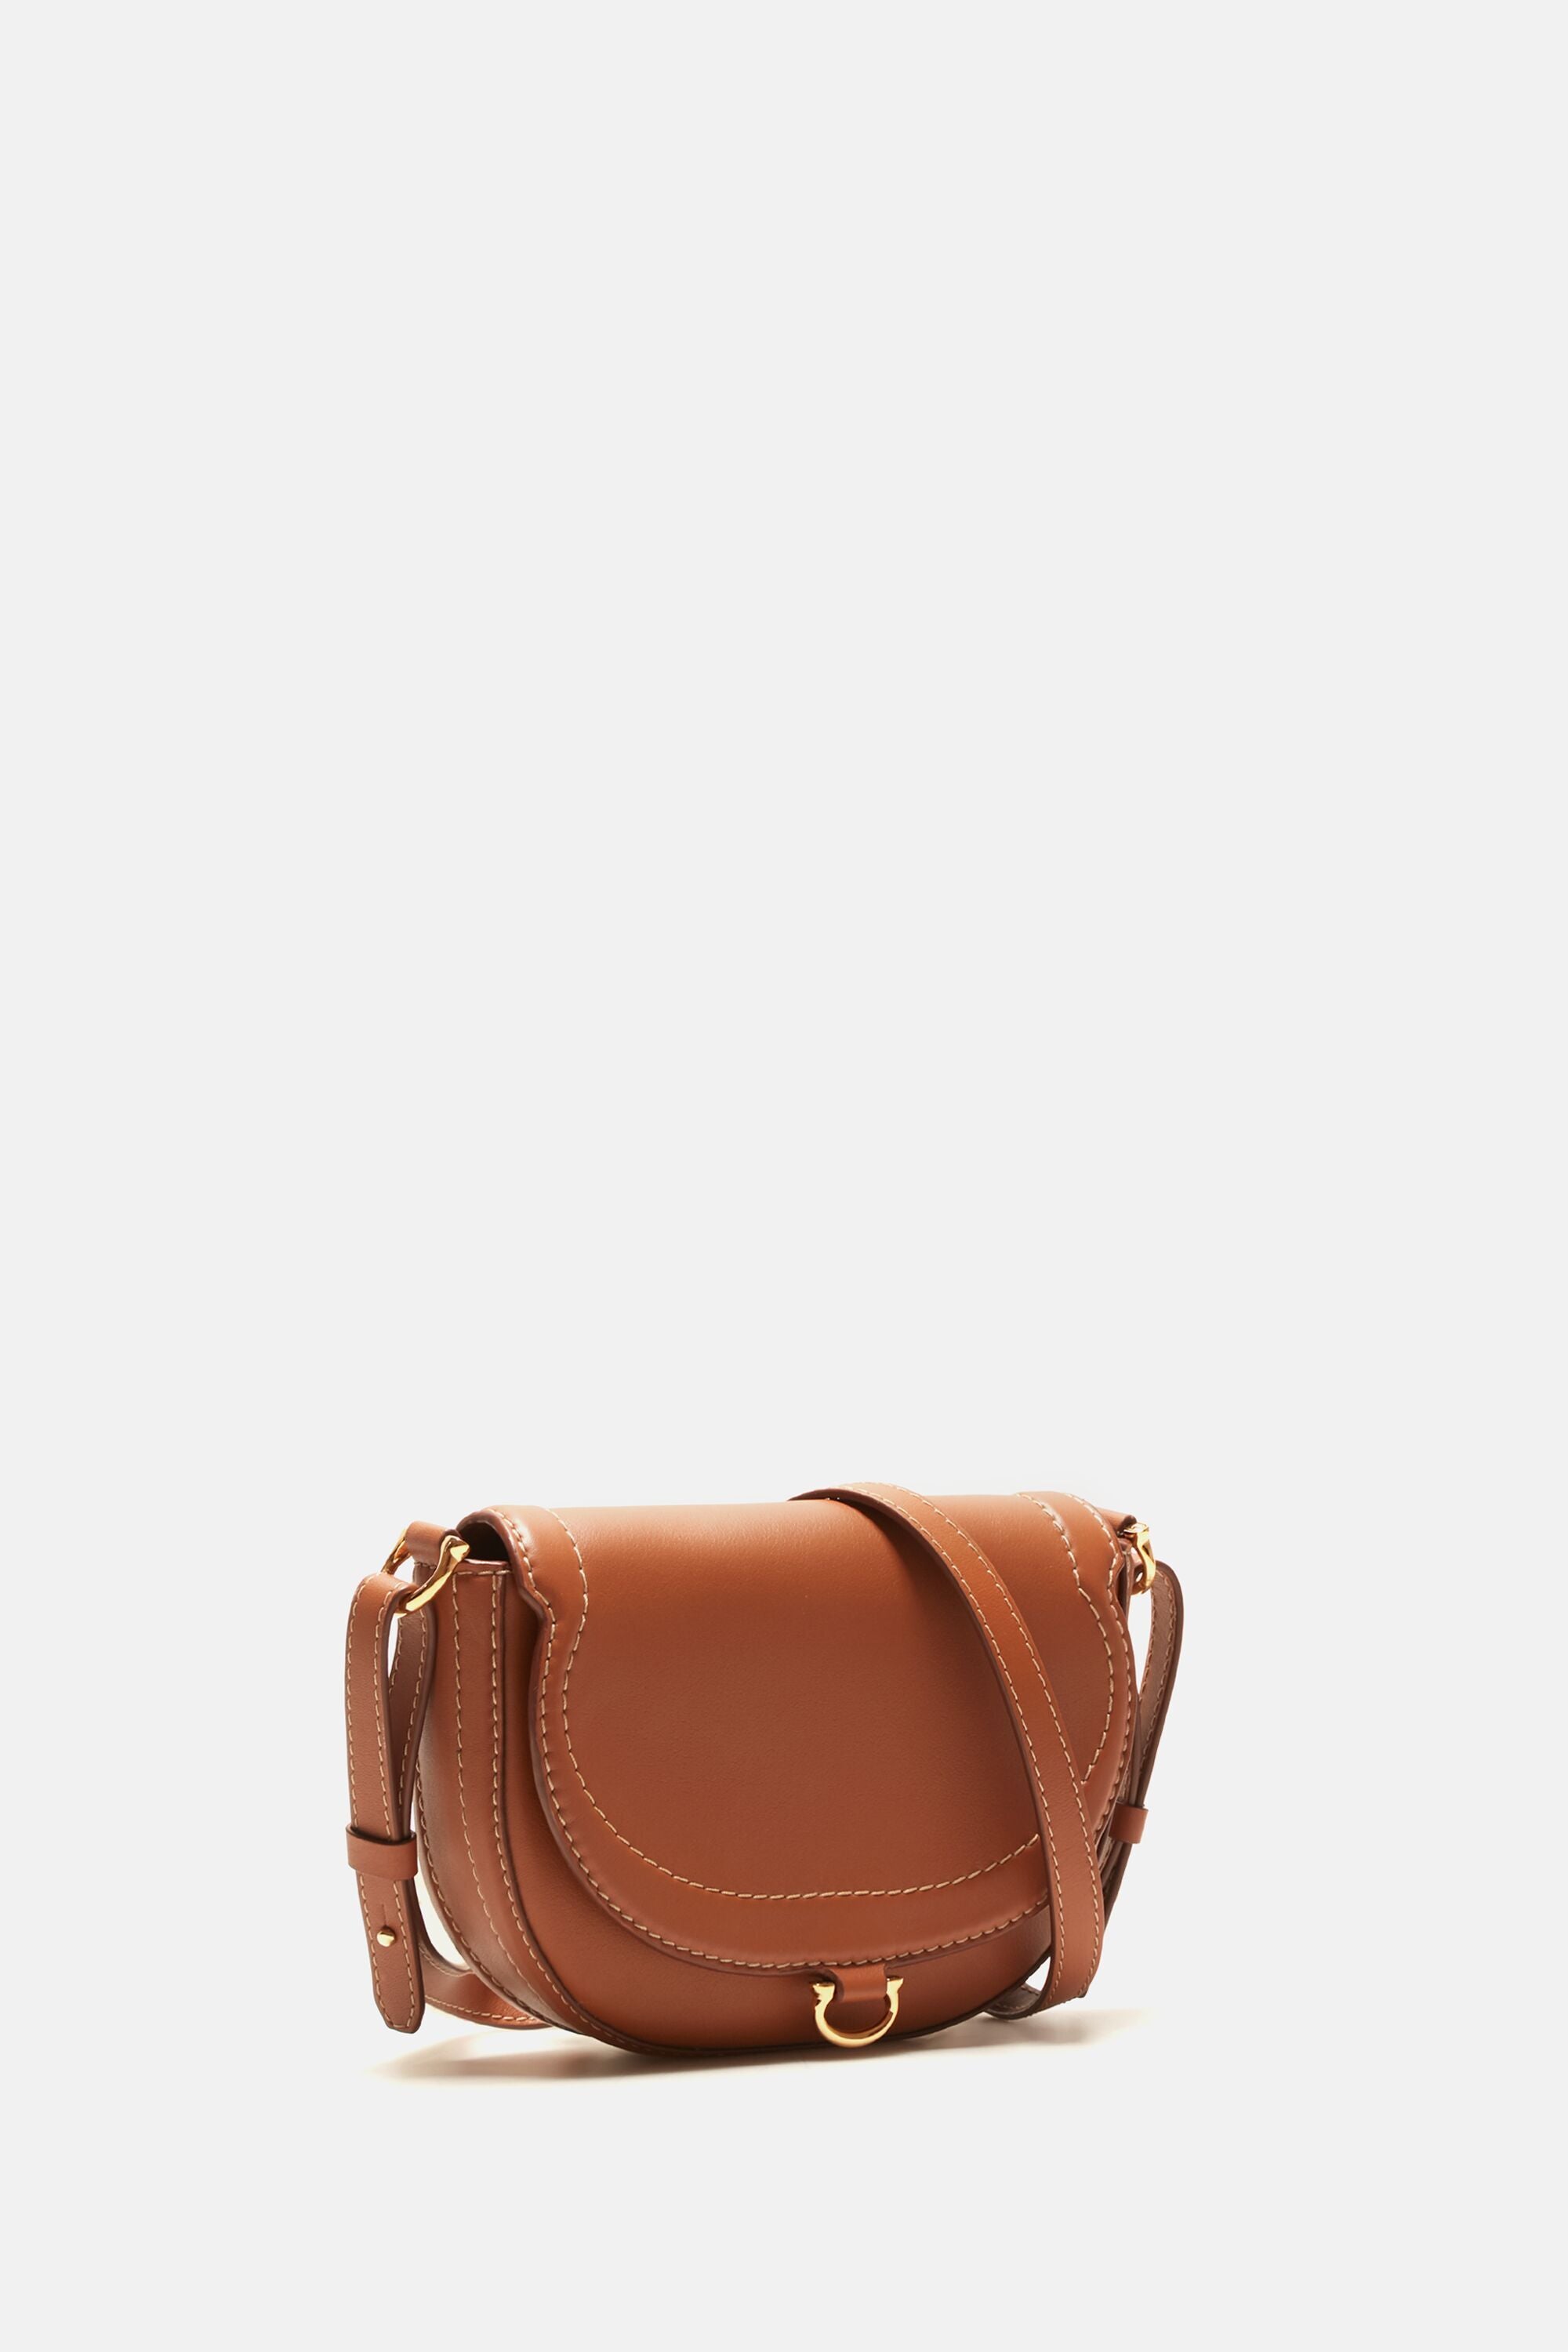 Charro Insignia Basket  Large handbag brown/beige - CH Carolina Herrera  United States